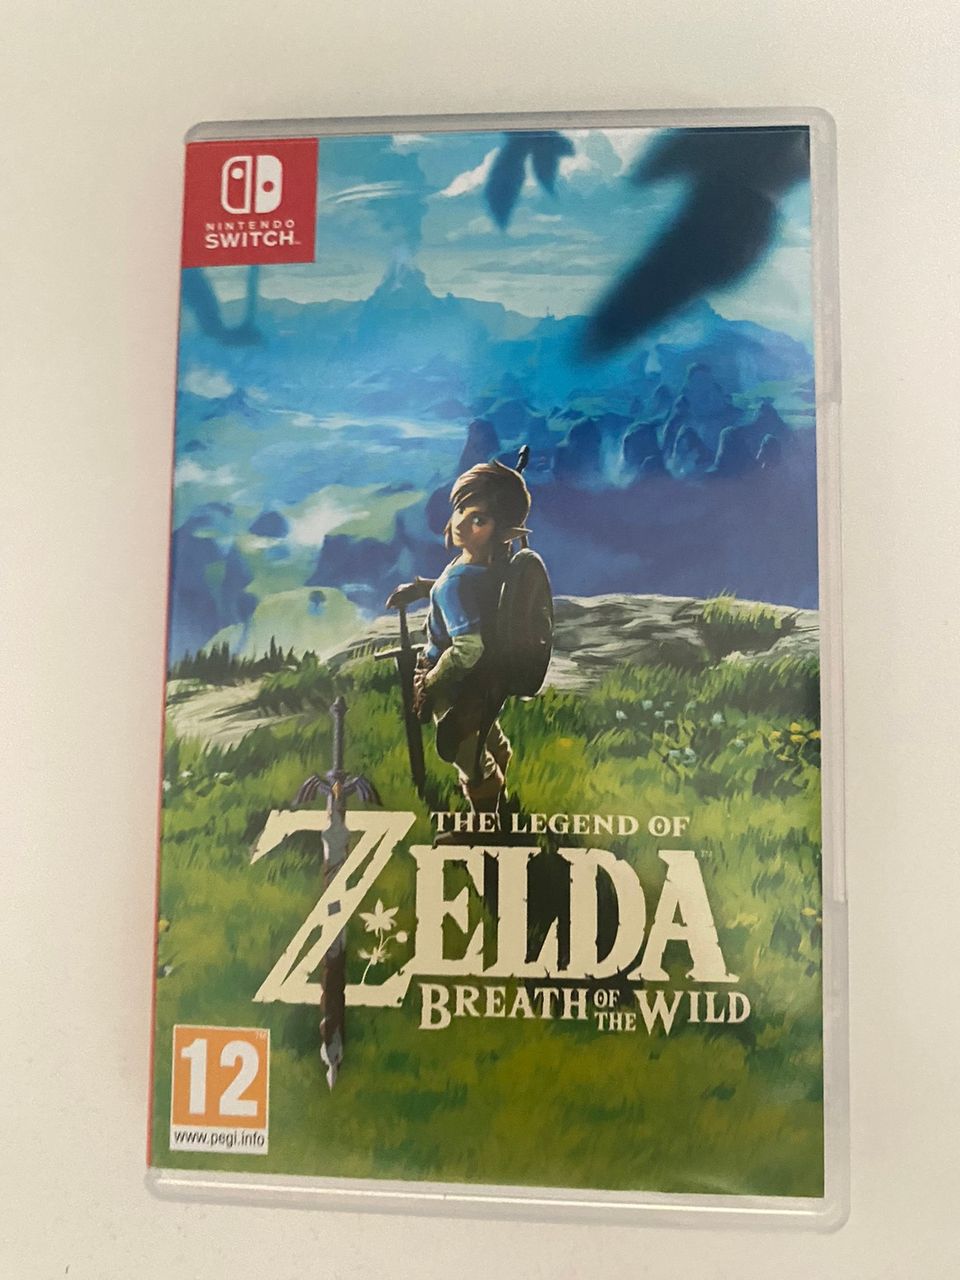 The Legend of Zelda Breath of the wild, Nintendo Switch